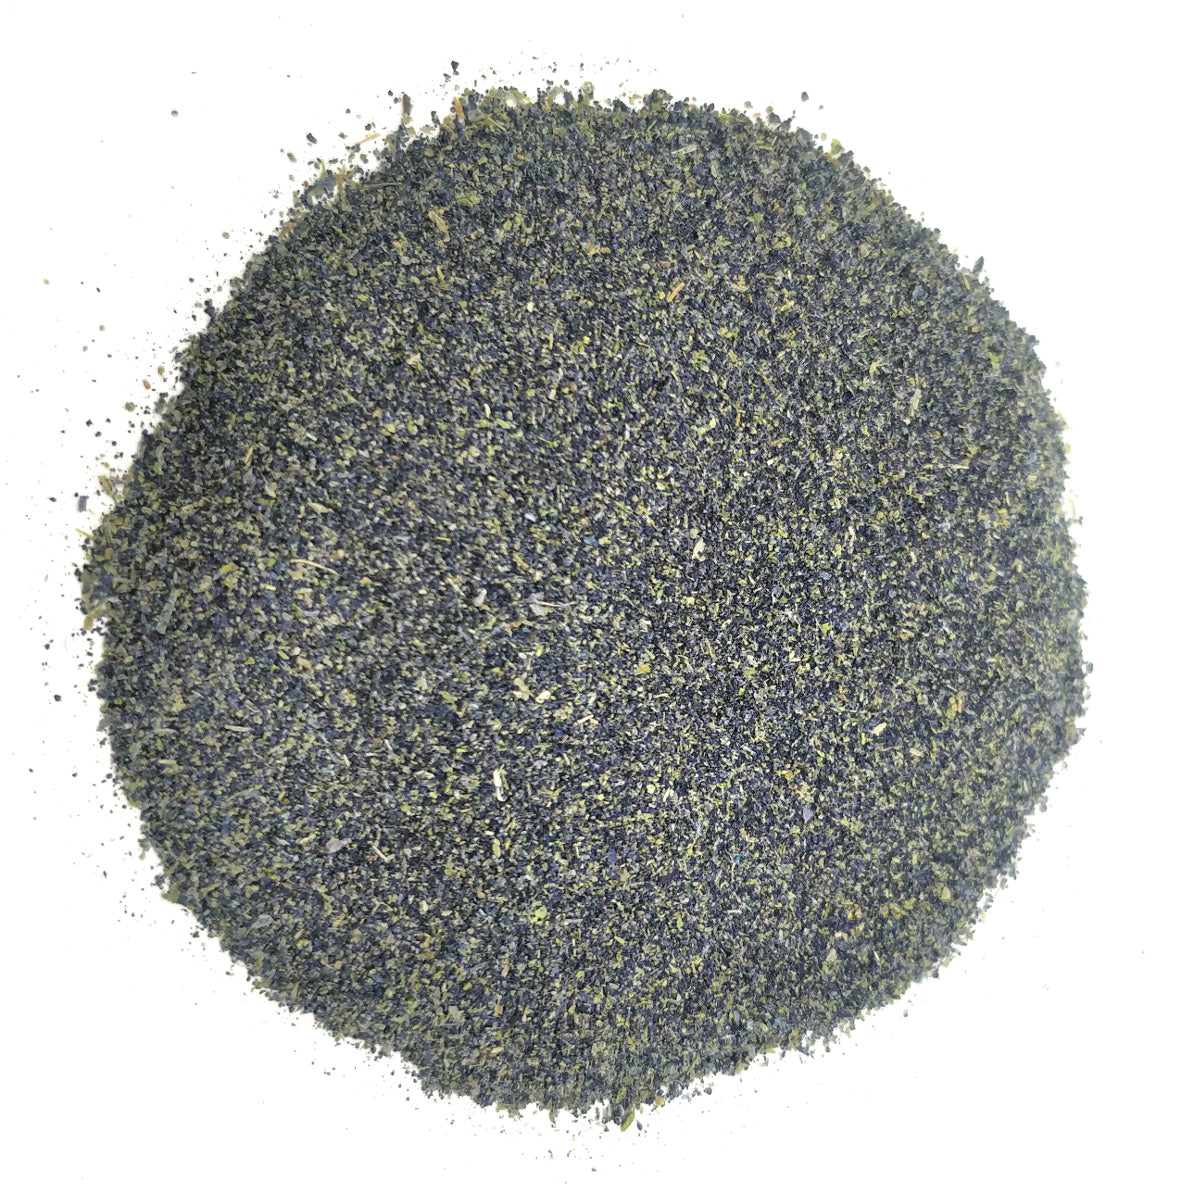 Blue Matcha - Limited Edition Powdered Herbal Tea